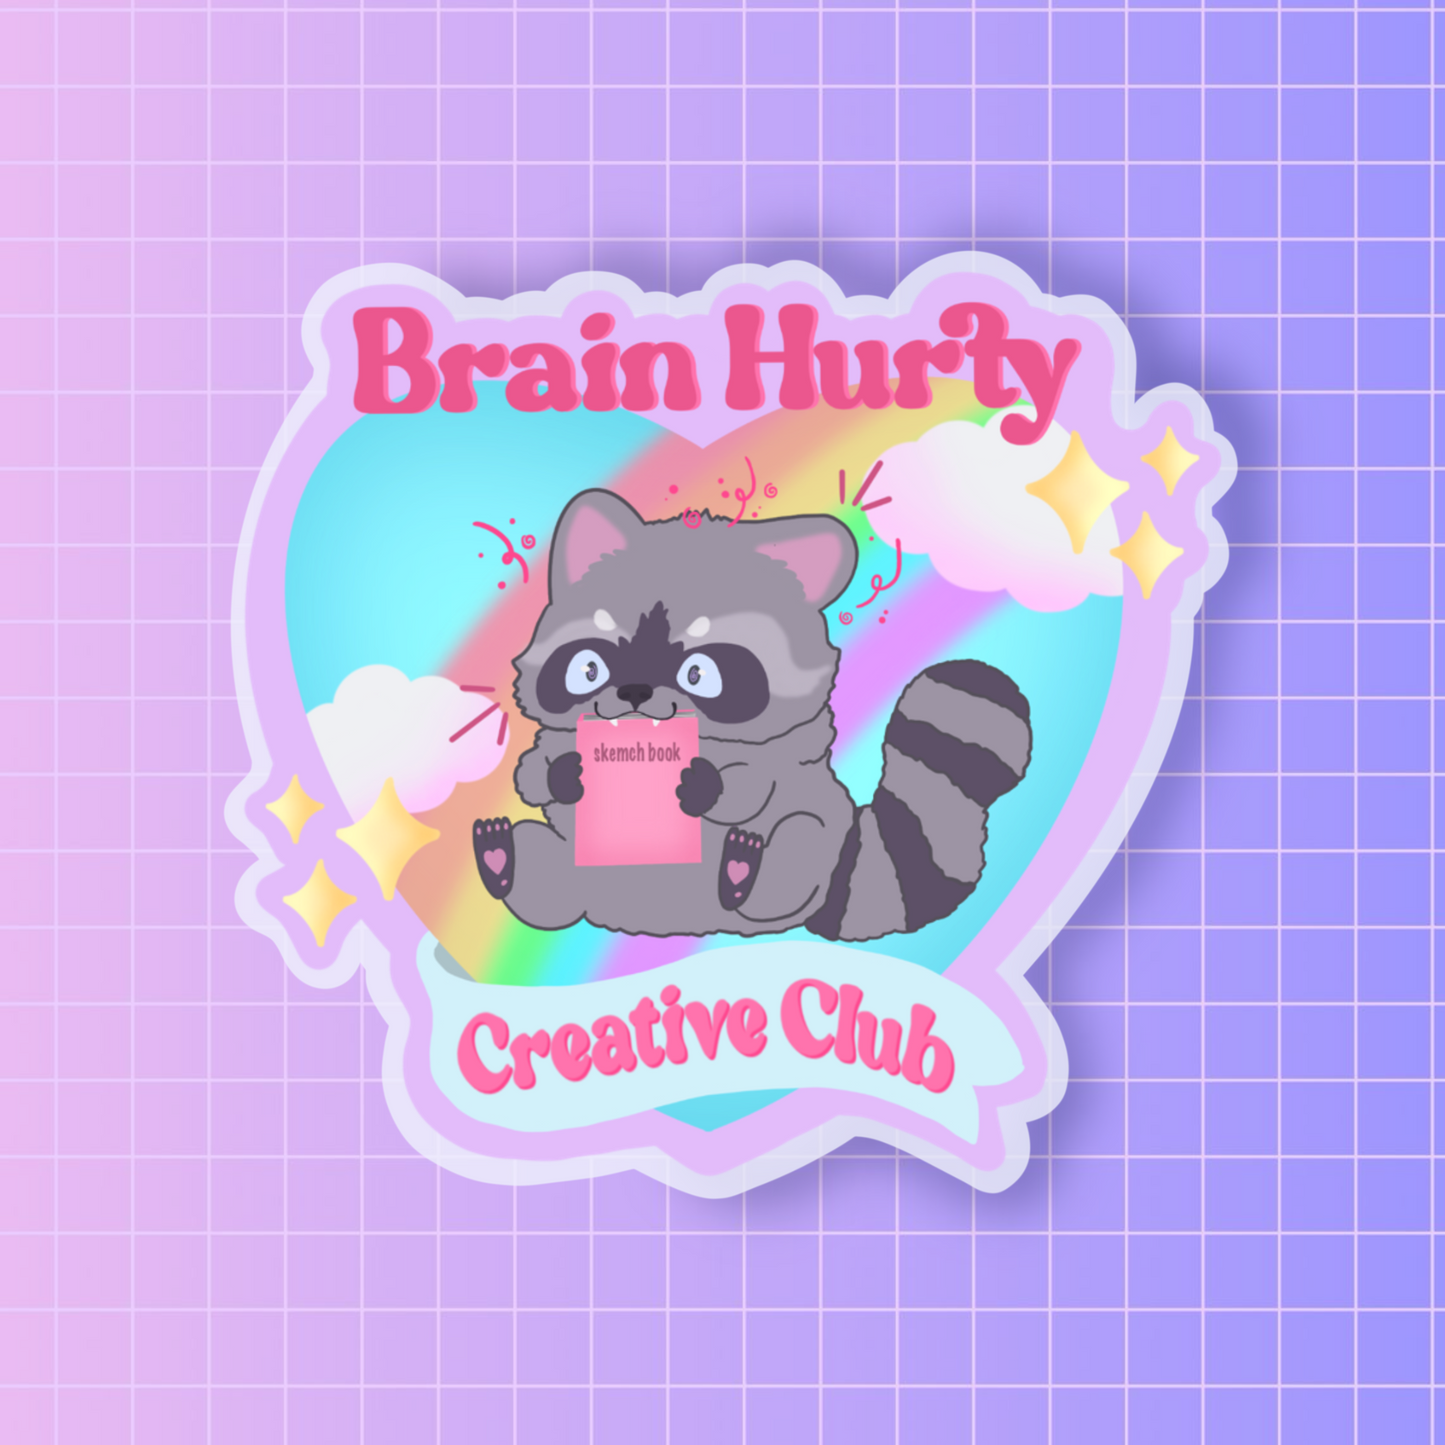 Brain hurty creative club sticker